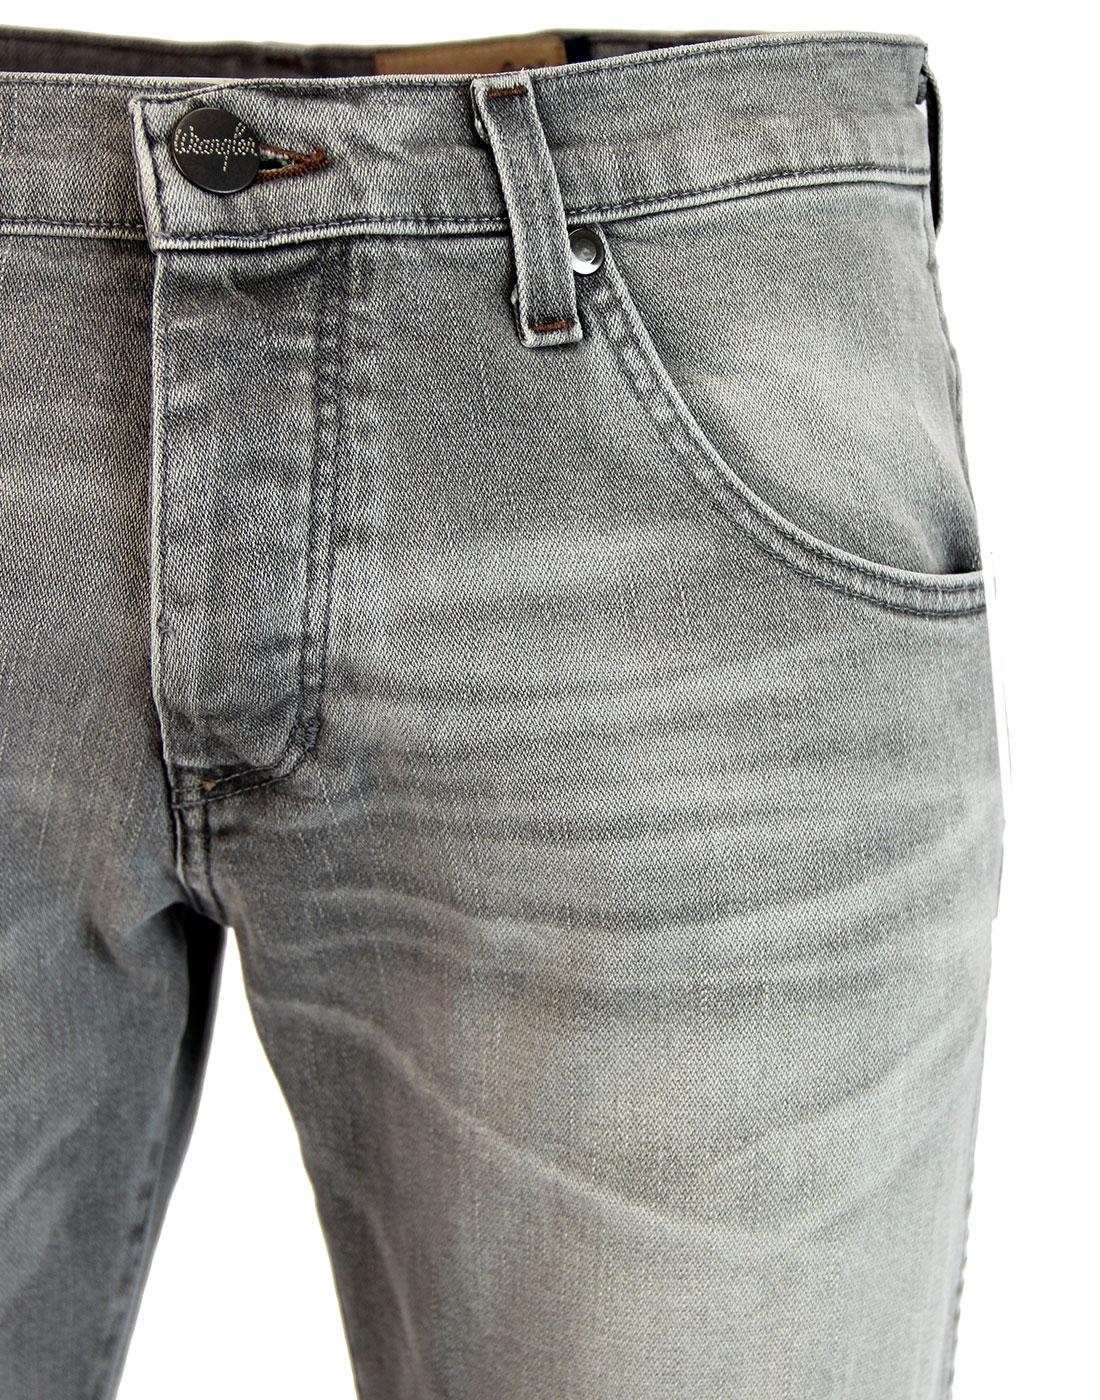 WRANGLER Spencer Retro Mod Relaxed Slim Distressed Denim Jeans